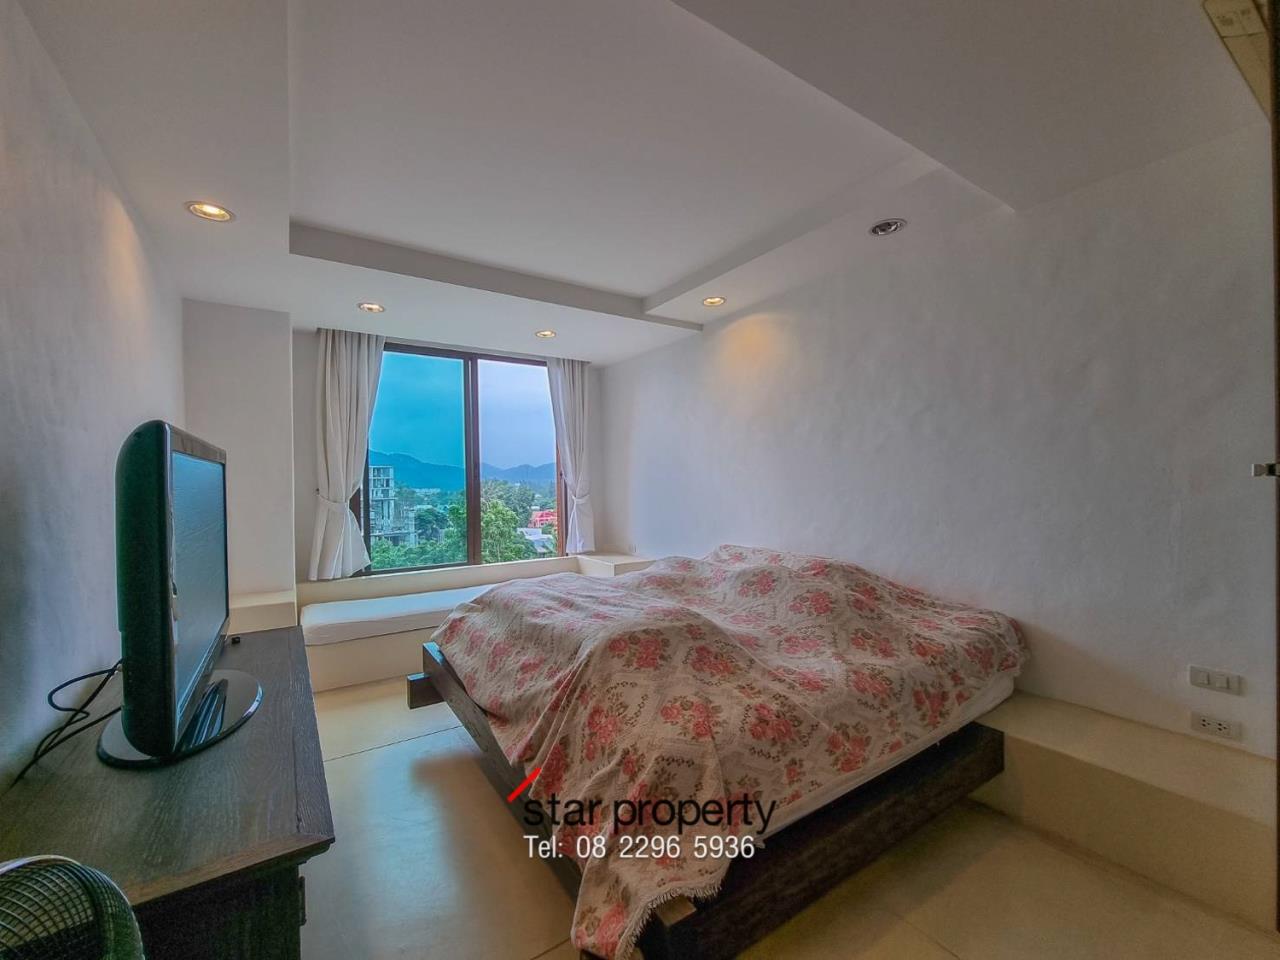 Star Property Hua Hin Co., Ltd Agency's Hot Deal Two Bed Room Condo At Lastortugas Hua Hin 4